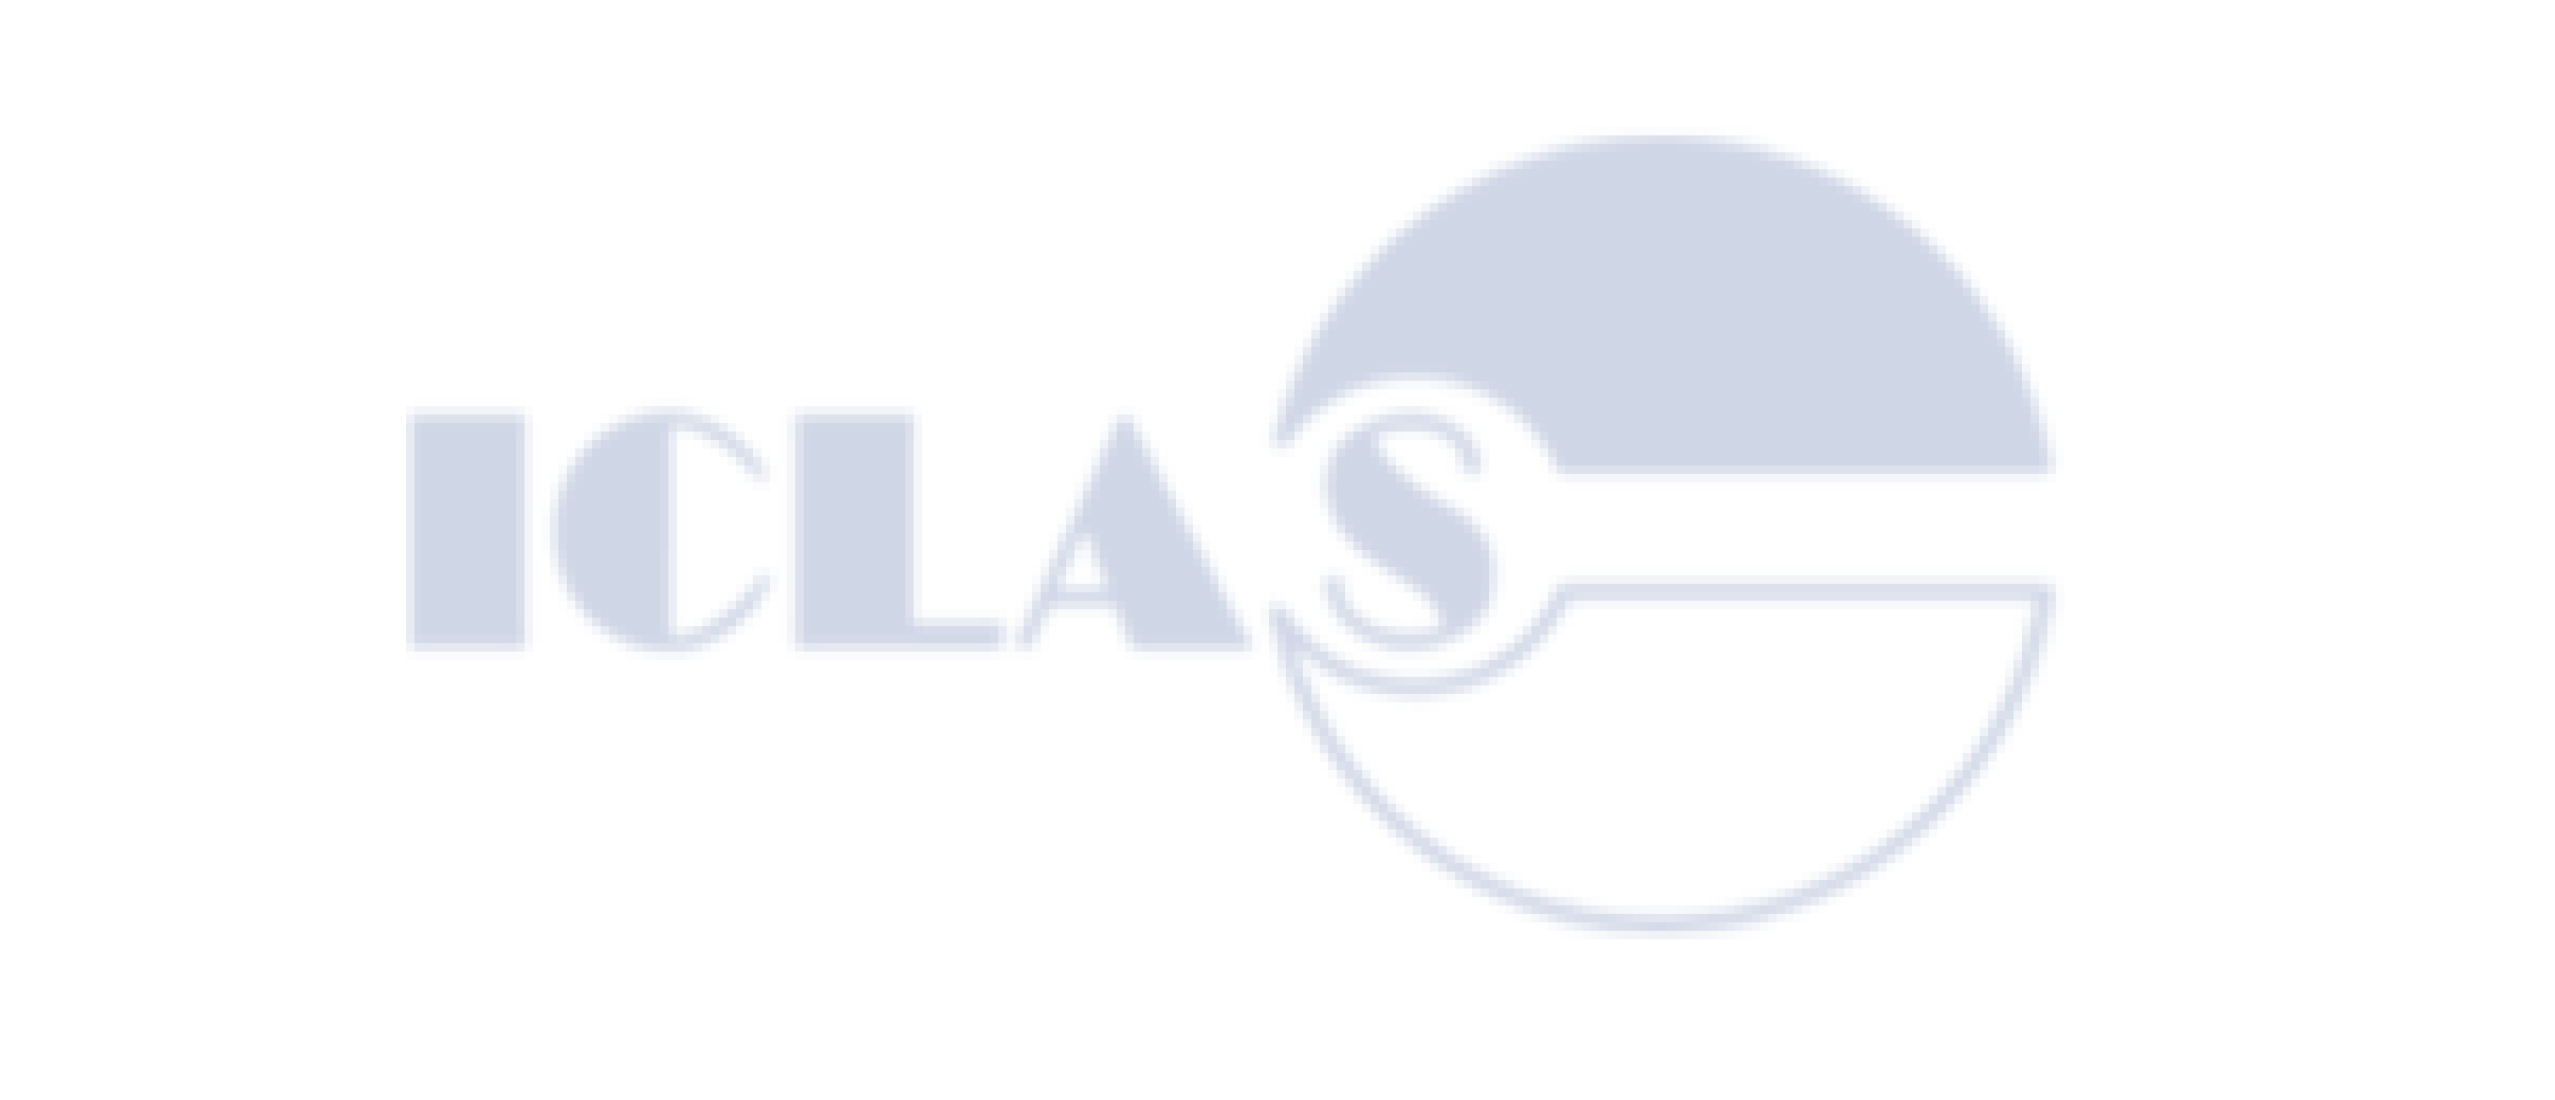 ICLAS News Report February 2022